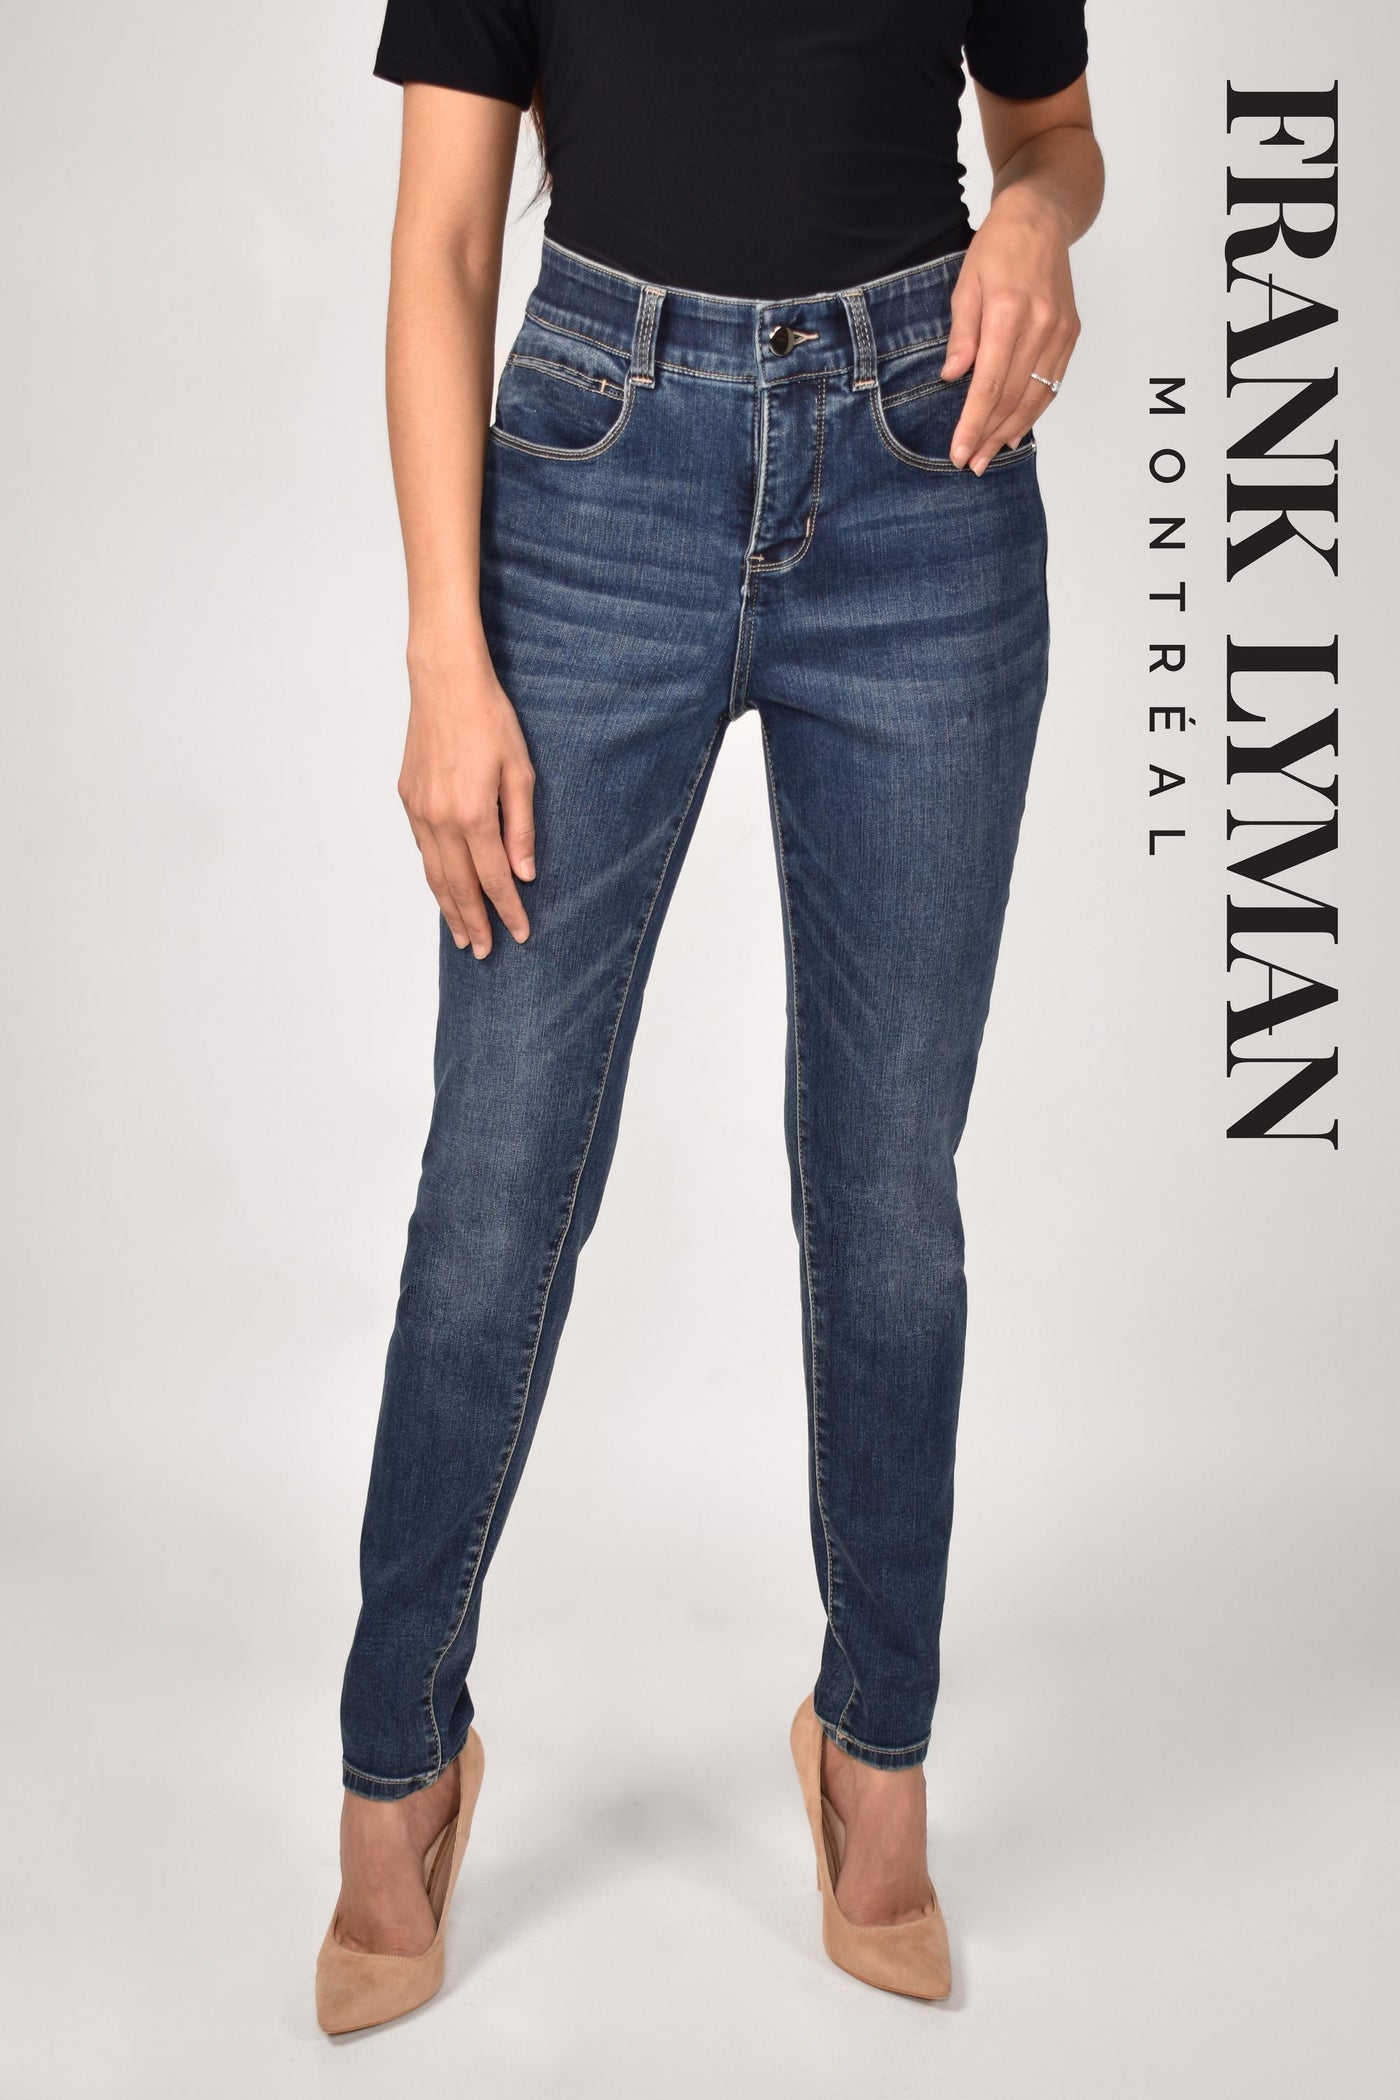 Frank Lyman Basic Jeans 